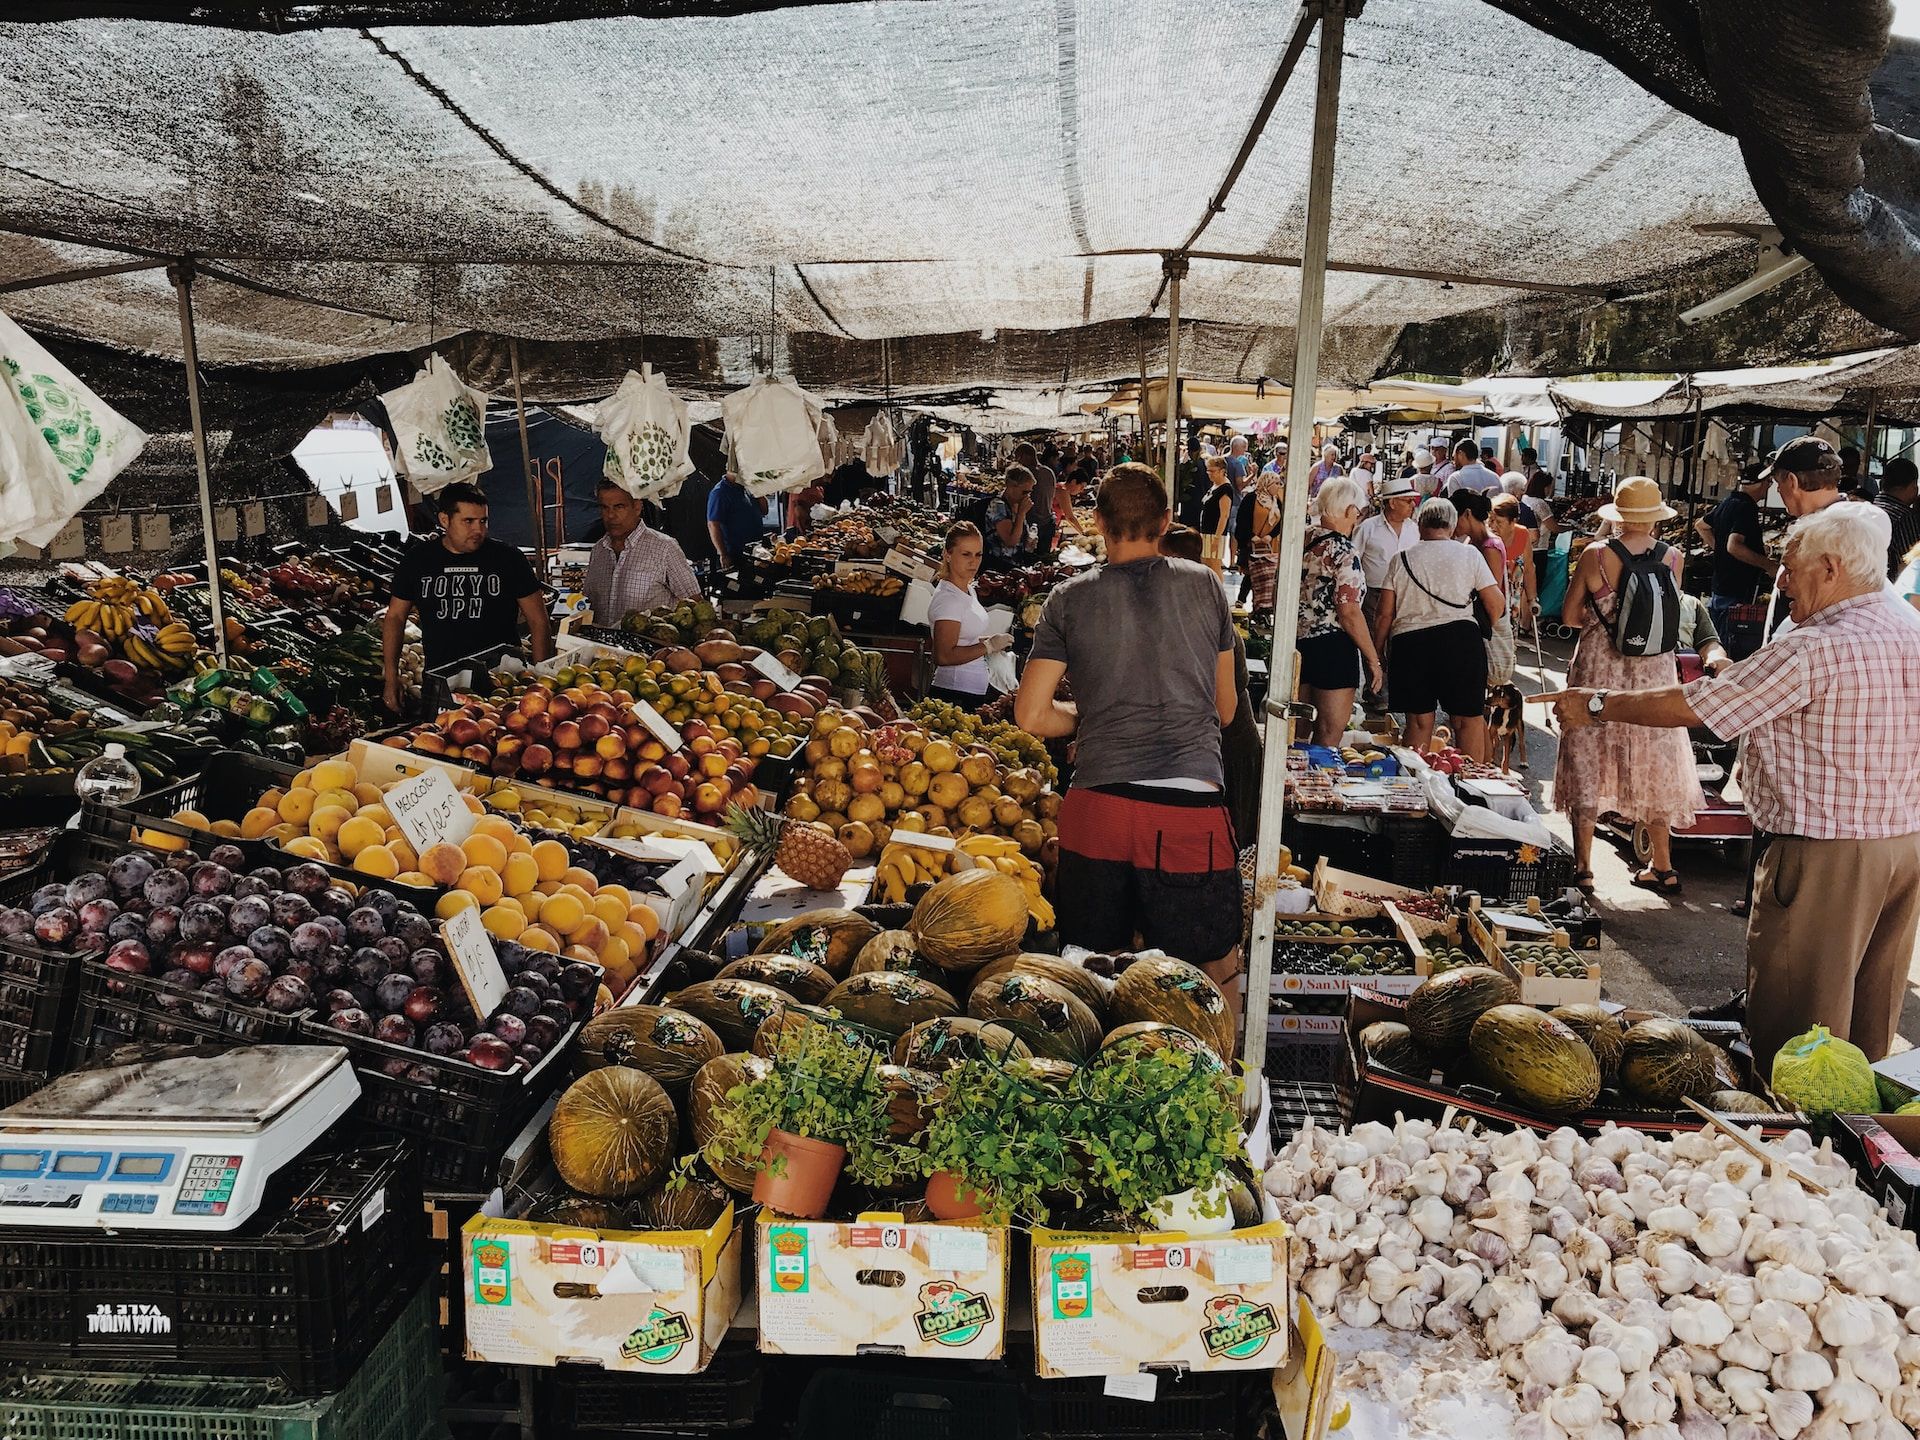 marché alimentaire en plein air - Photo by Caleb Stokes on https://unsplash.com/fr/photos/hz4YhG39q2s